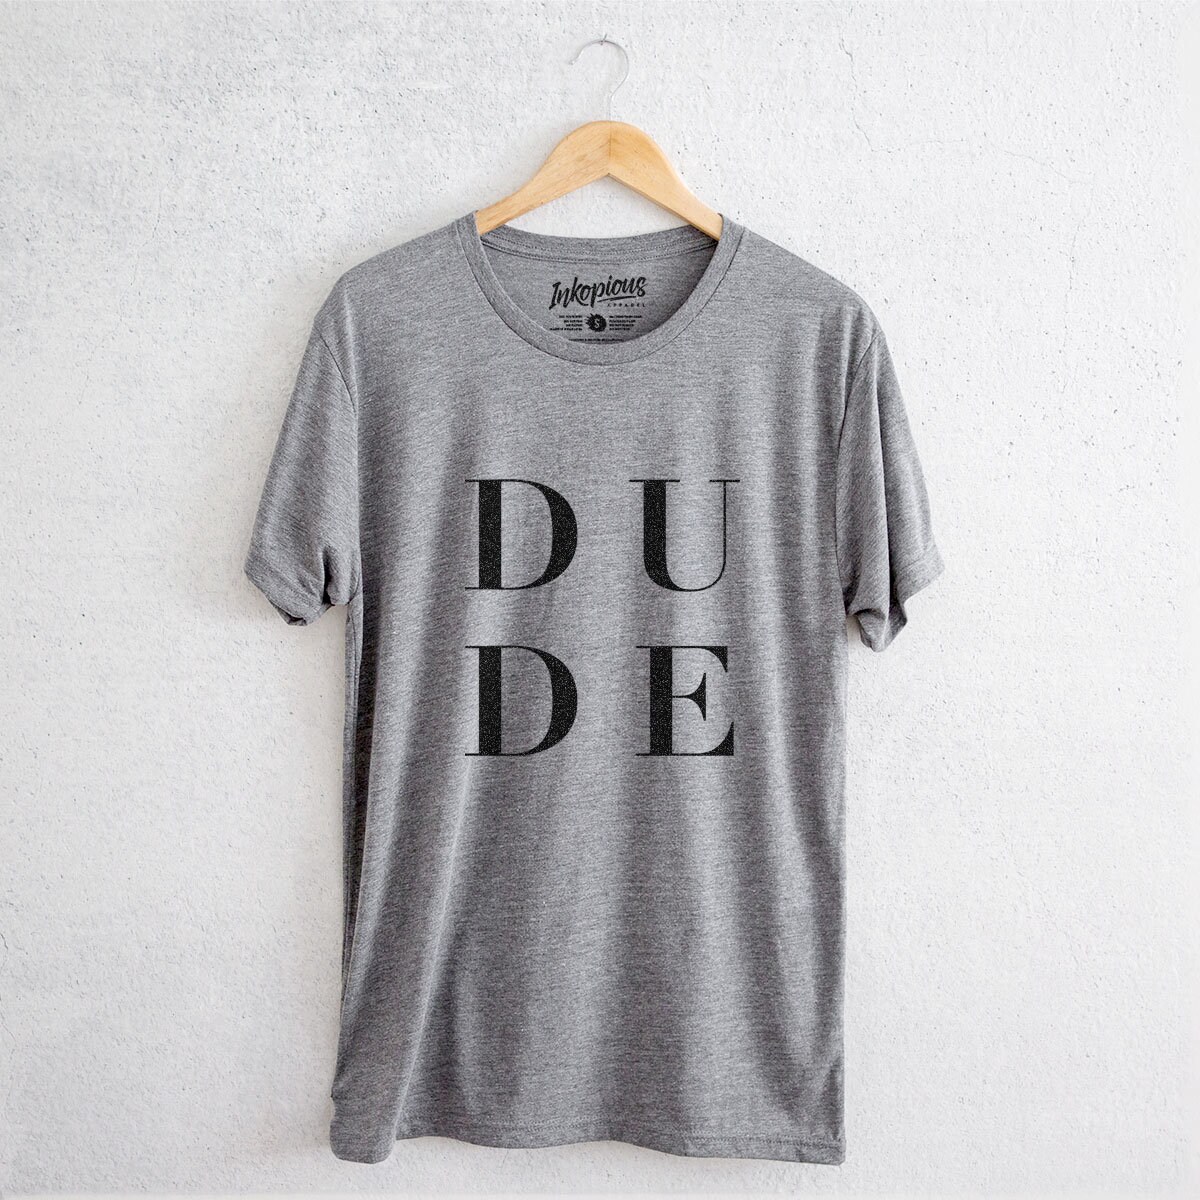 Dude Shirt - Tri-Blend Unisex Crewneck T-Shirt Dad Gift, Cool